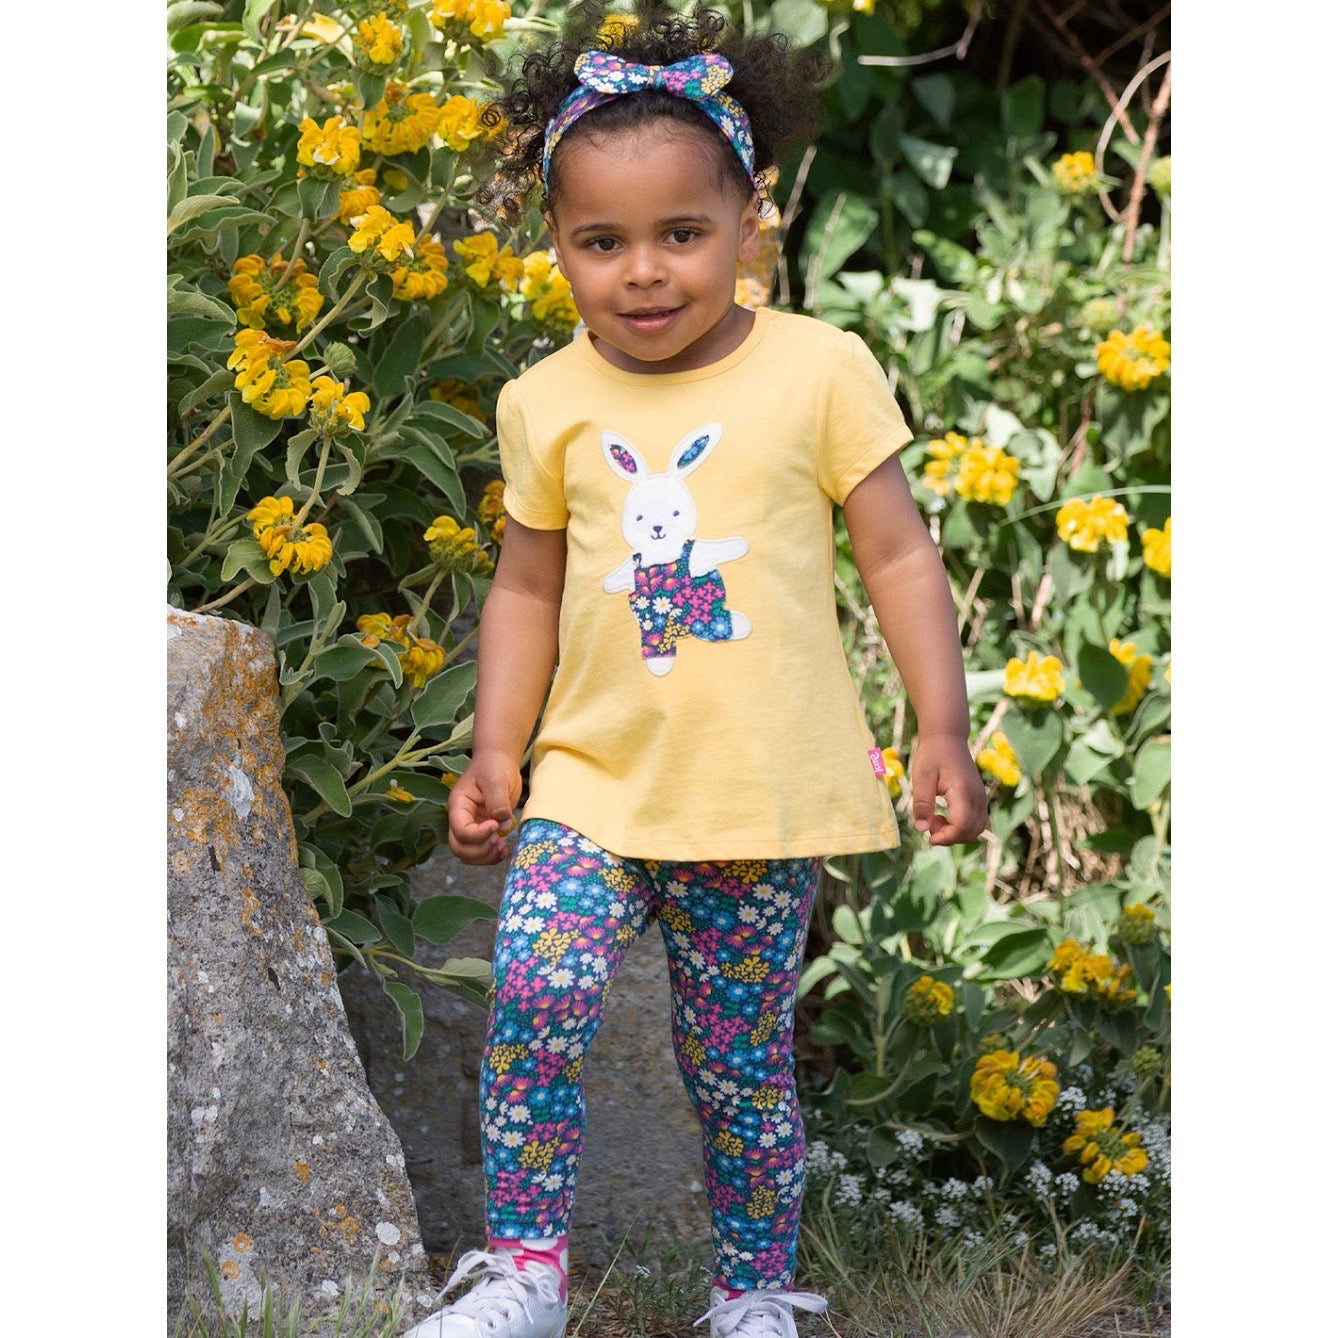 Kite Bunny Balance Infant Tunic Top 41-9025 Clothing 3-6M / Yellow,6-9M / Yellow,9-12M / Yellow,12-18M / Yellow,18-24M/2Y / Yellow